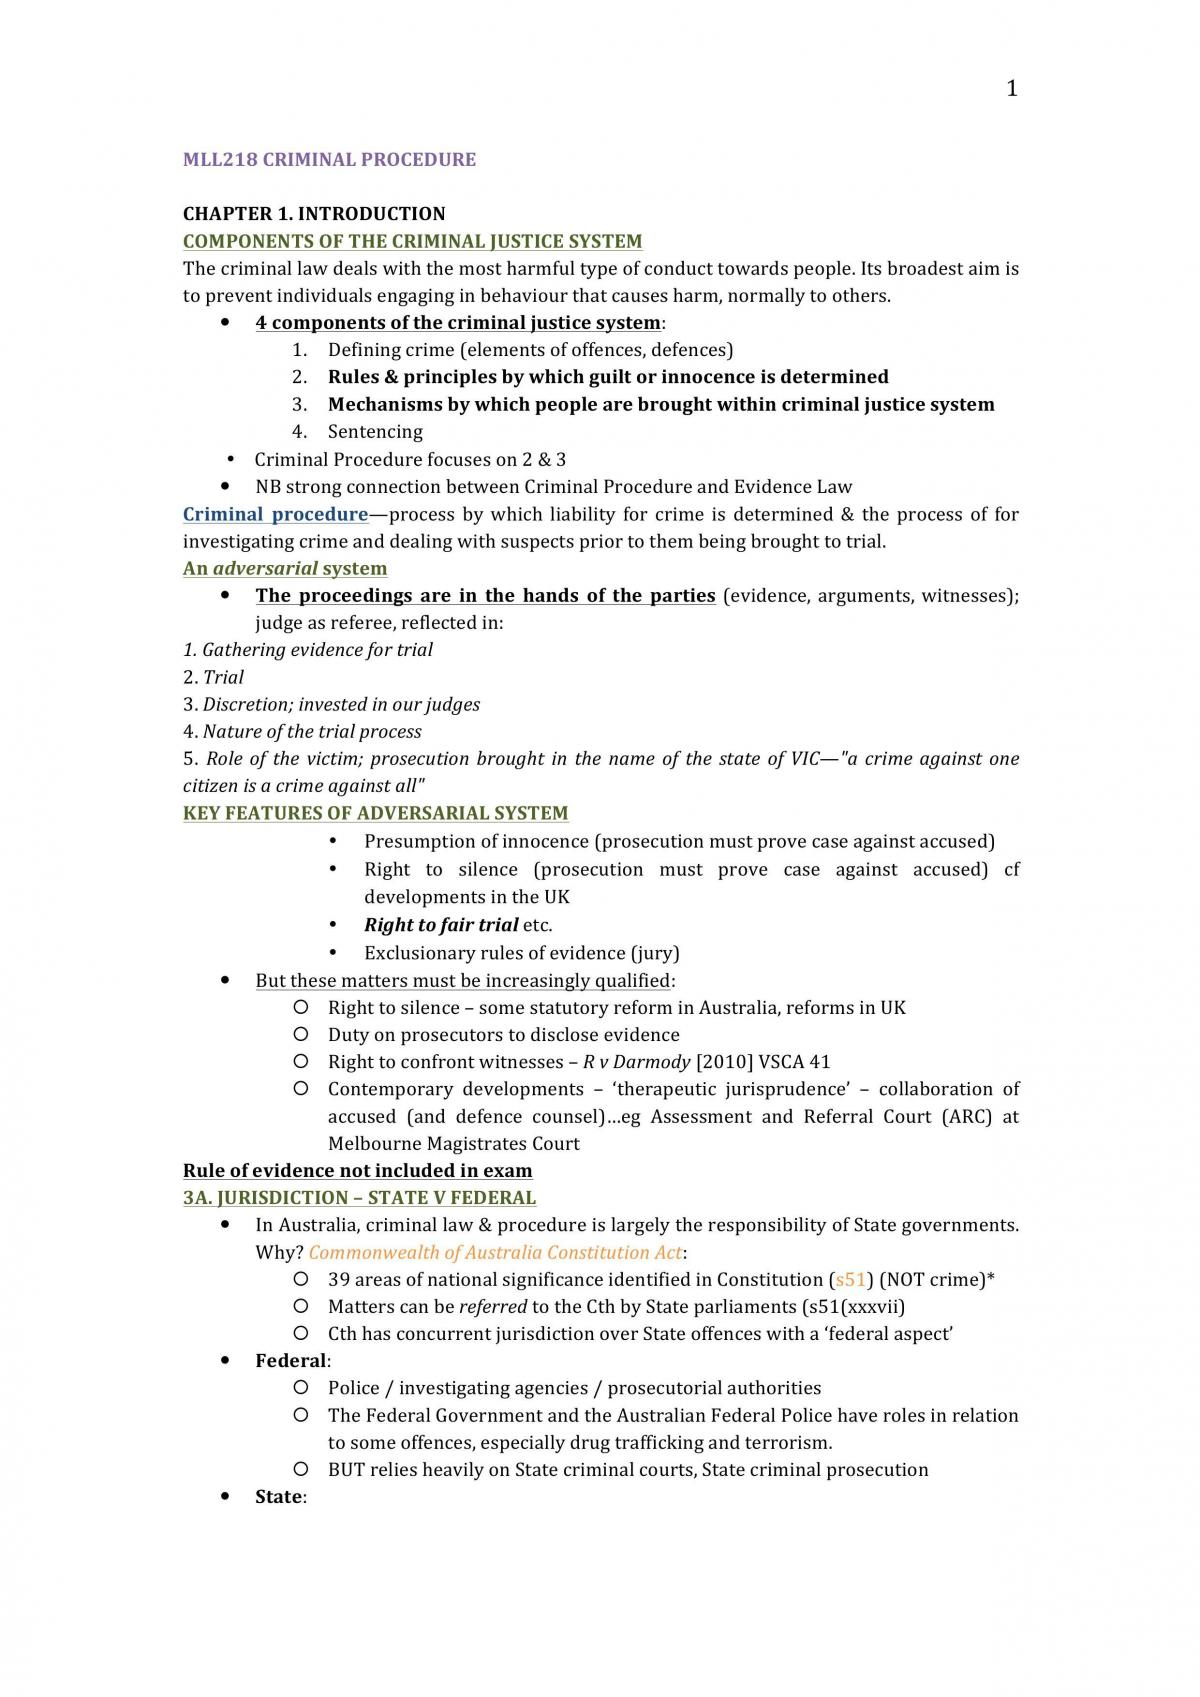 Criminal Procedure HD Notes - Page 1